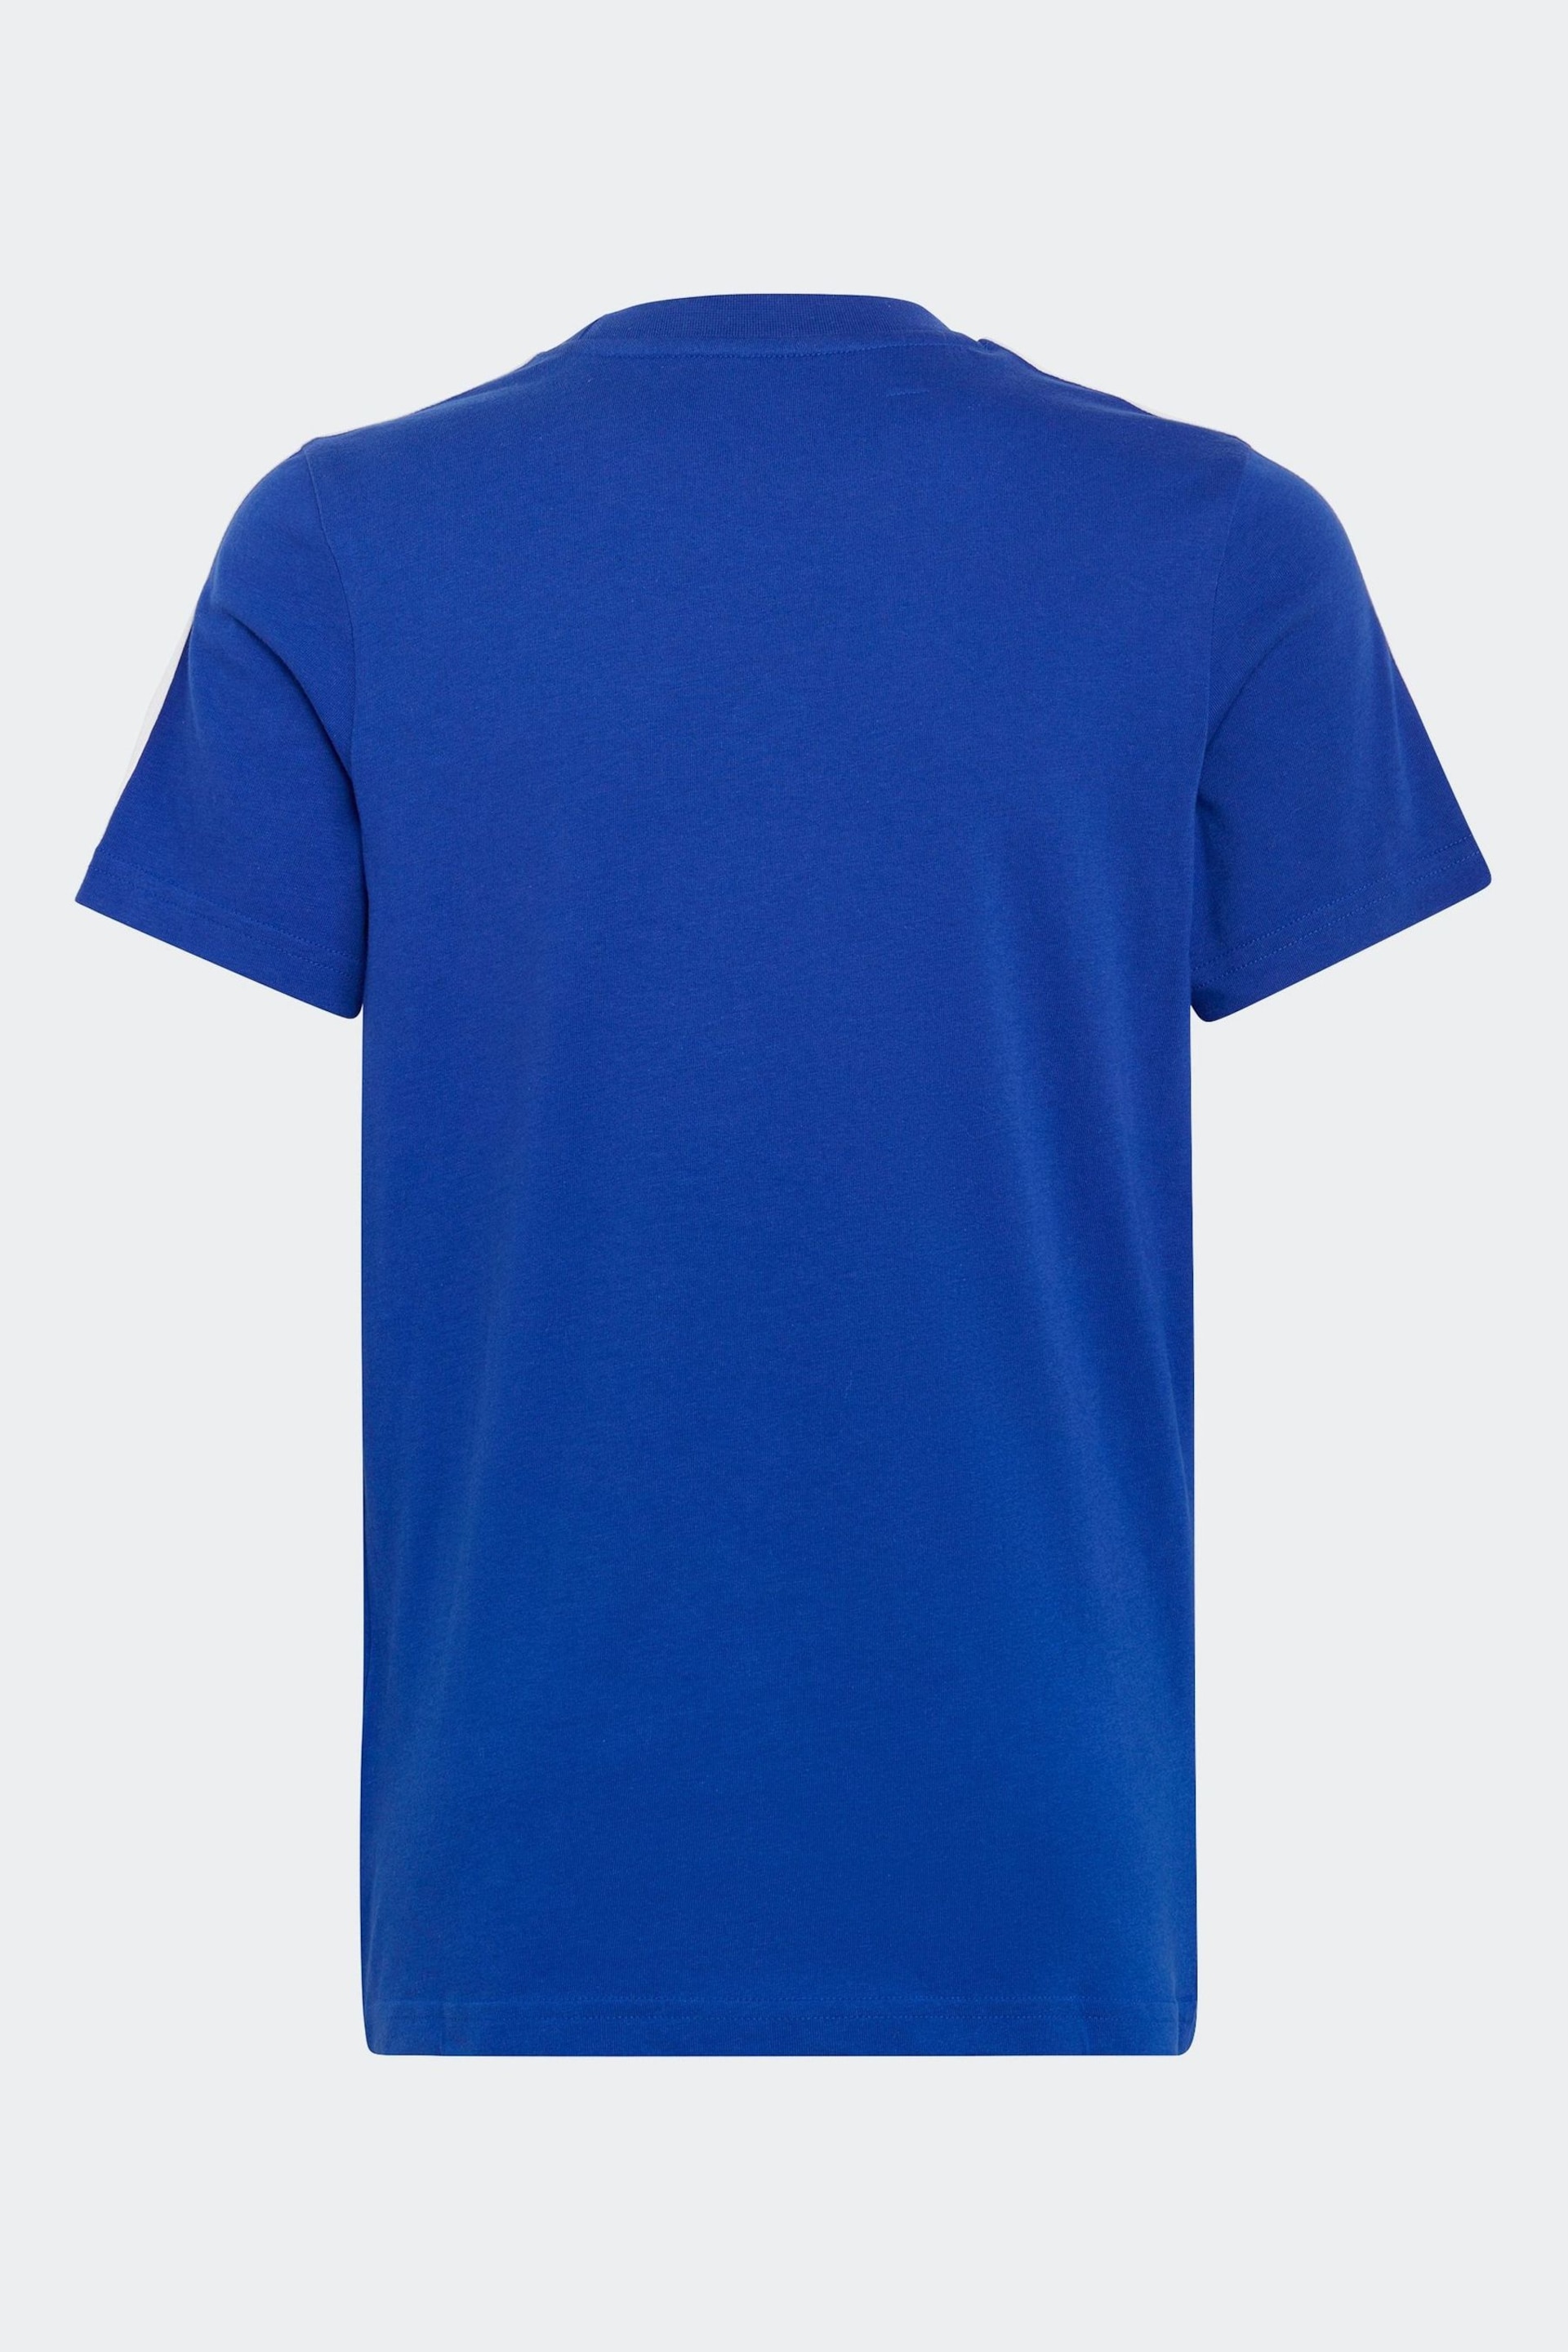 adidas Blue Essentials 3-Stripes Cotton T-Shirt - Image 2 of 5